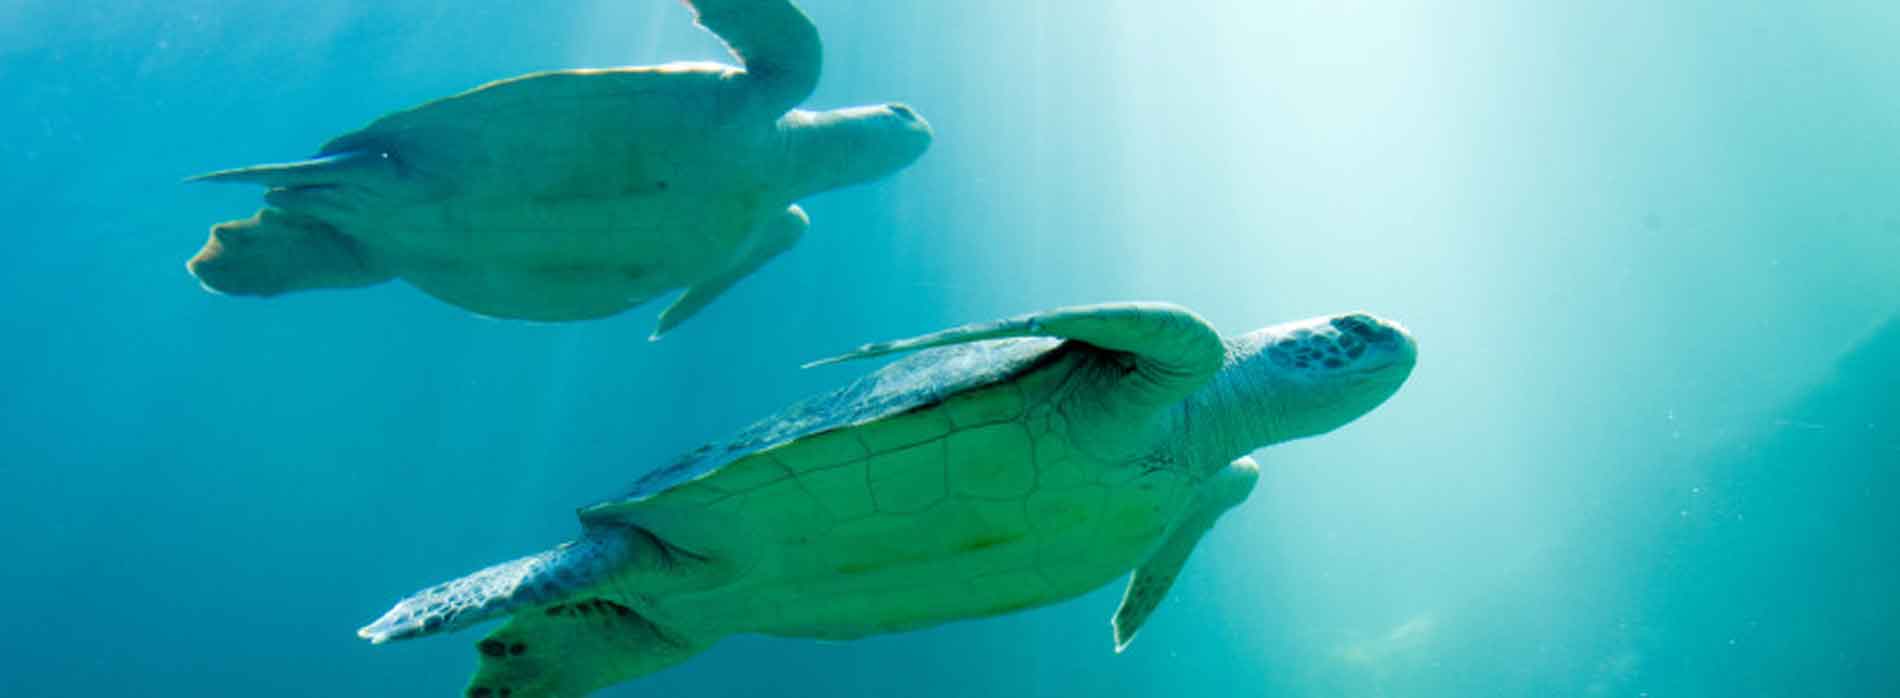 Two sea turtles swimming underwater